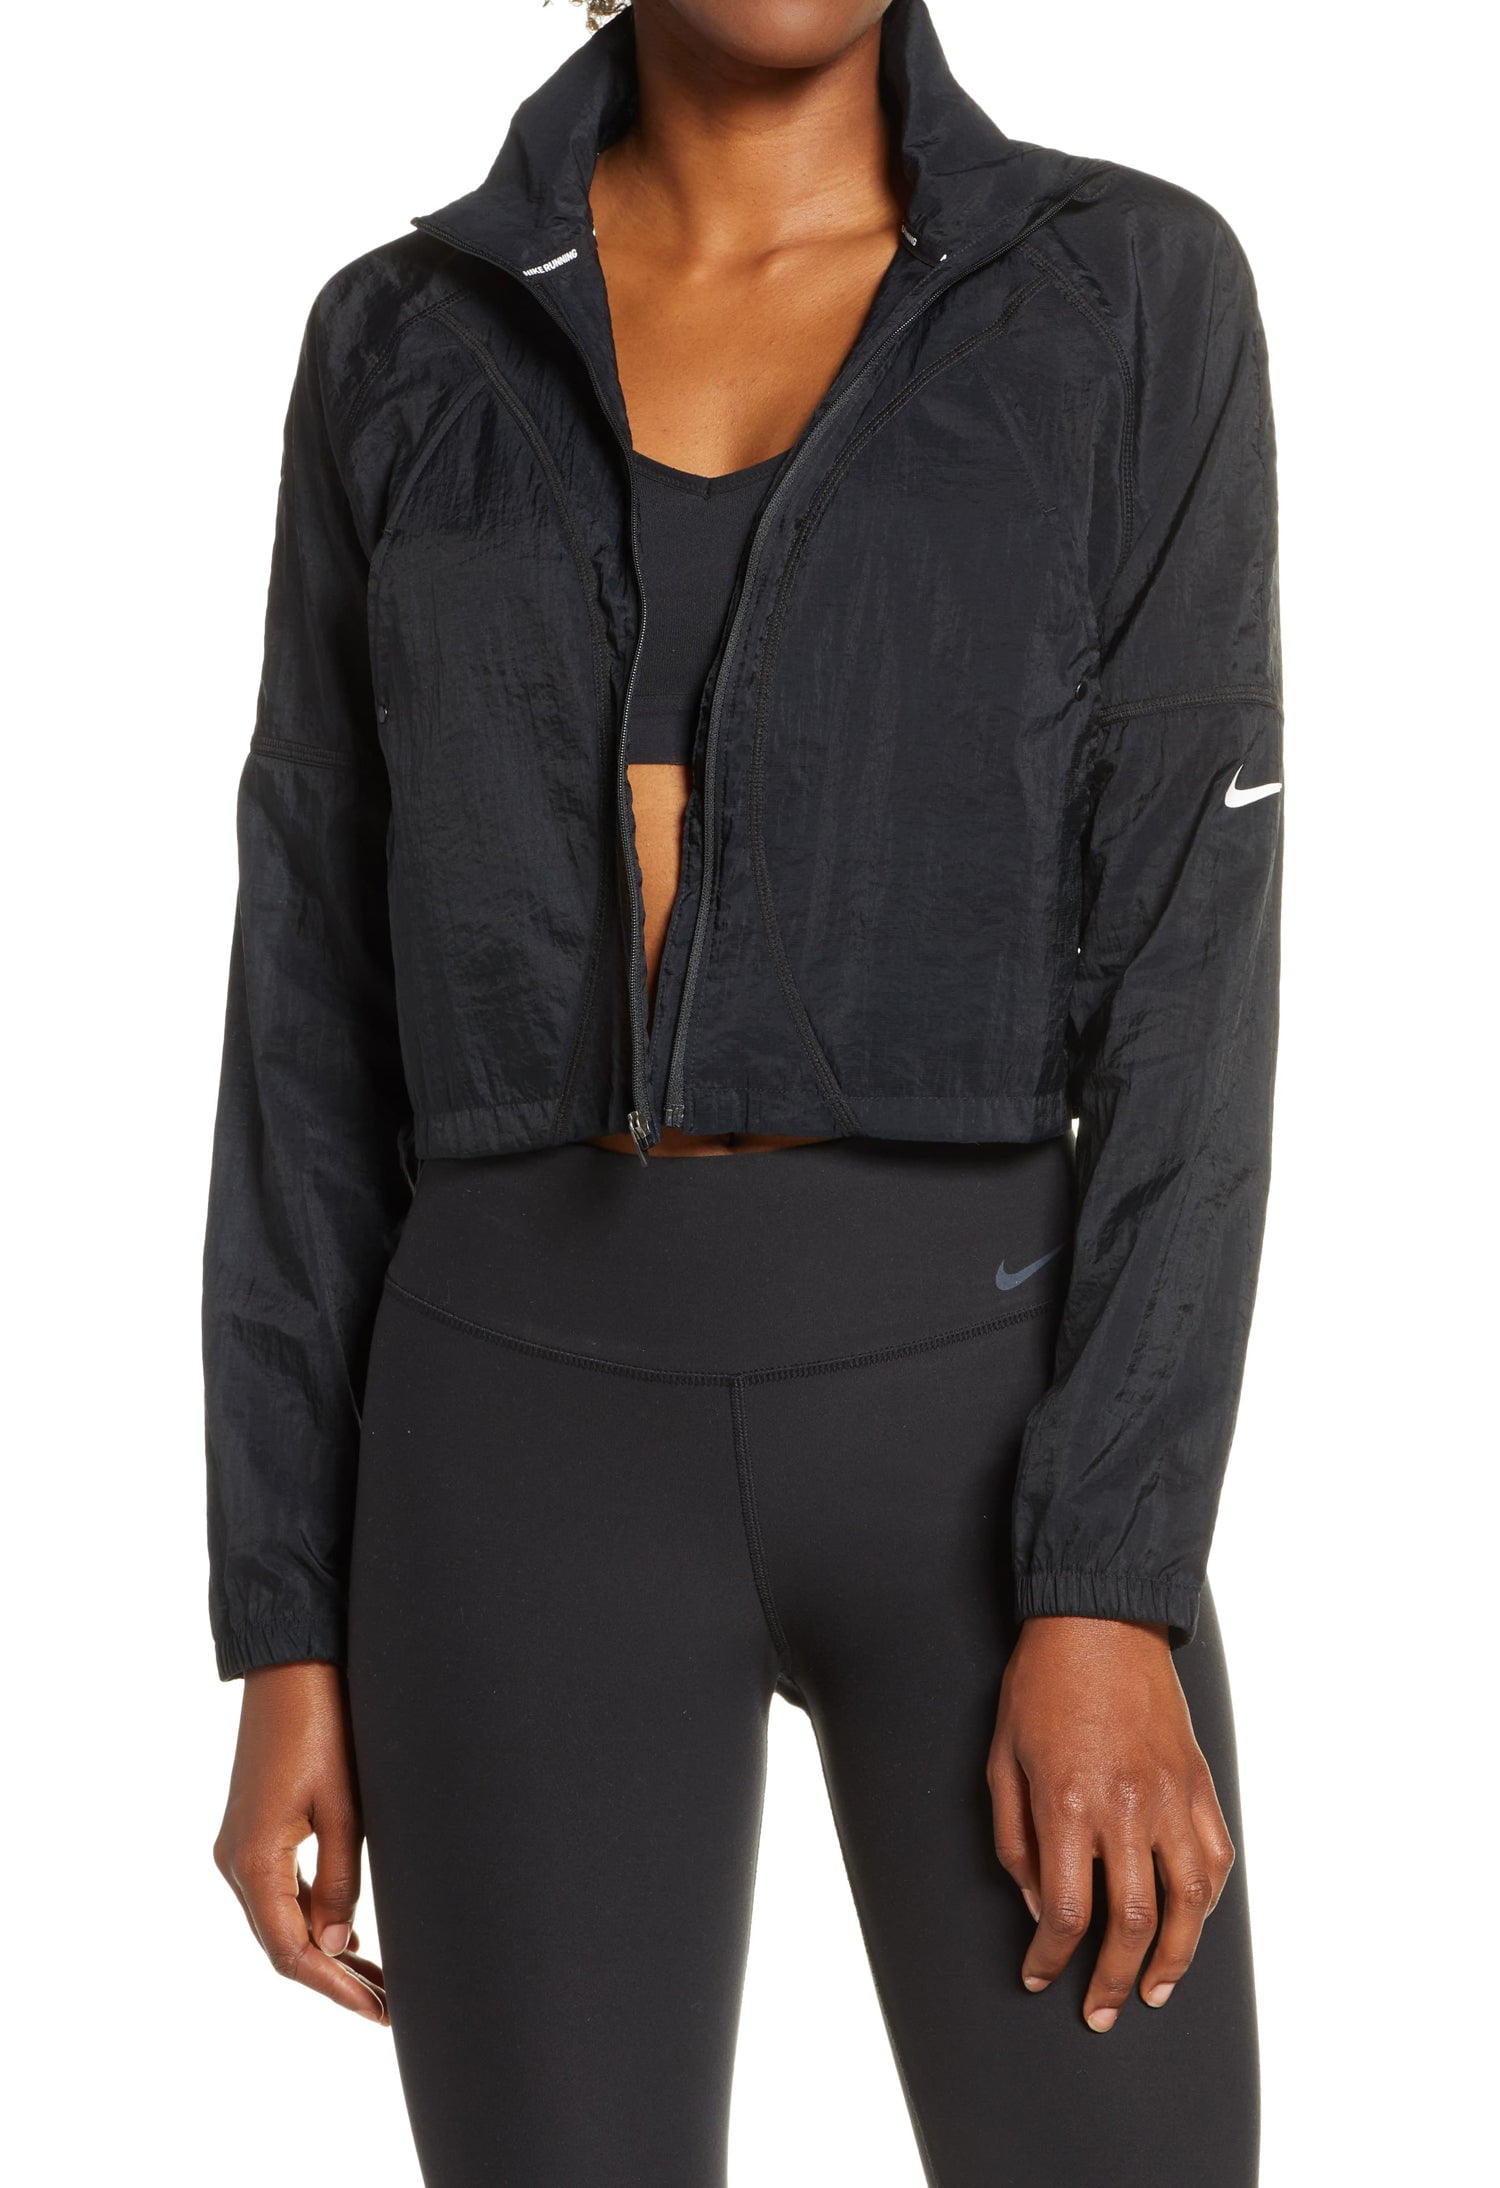 alma atractivo ballena Nike Womens Translucent Cropped Running Jacket - Walmart.com